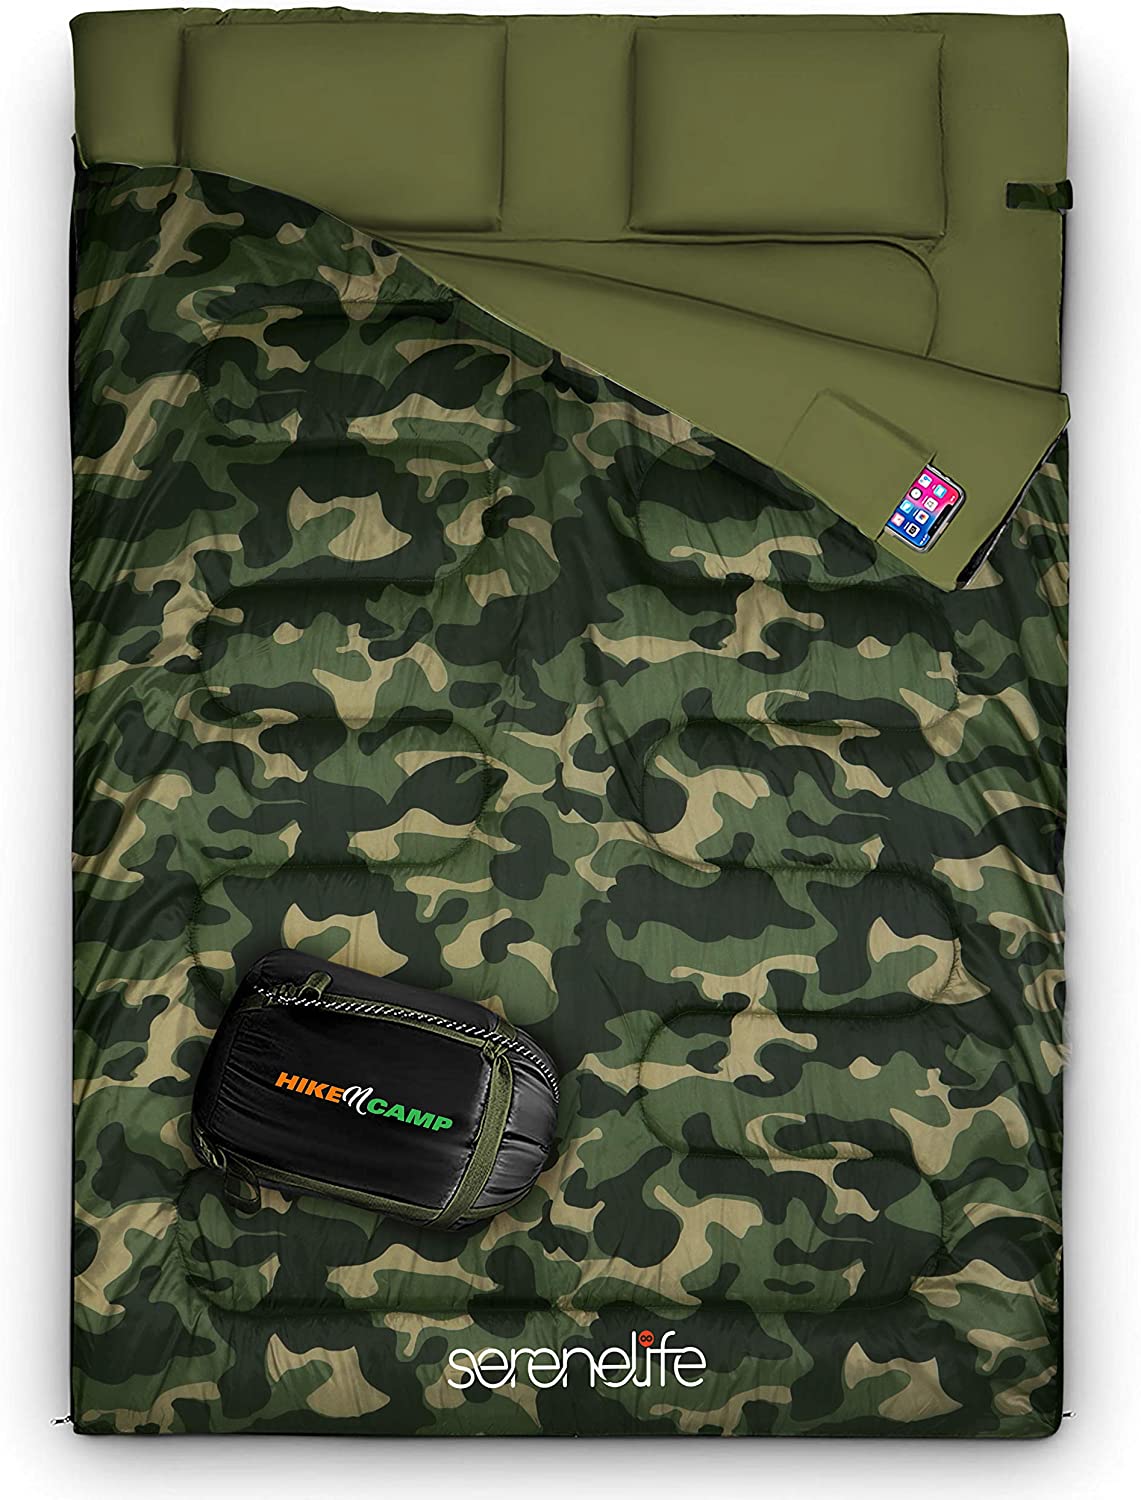 Double Sleeping Bag for Adults/Teens Backpacking Sleeping Bag Camping Gear